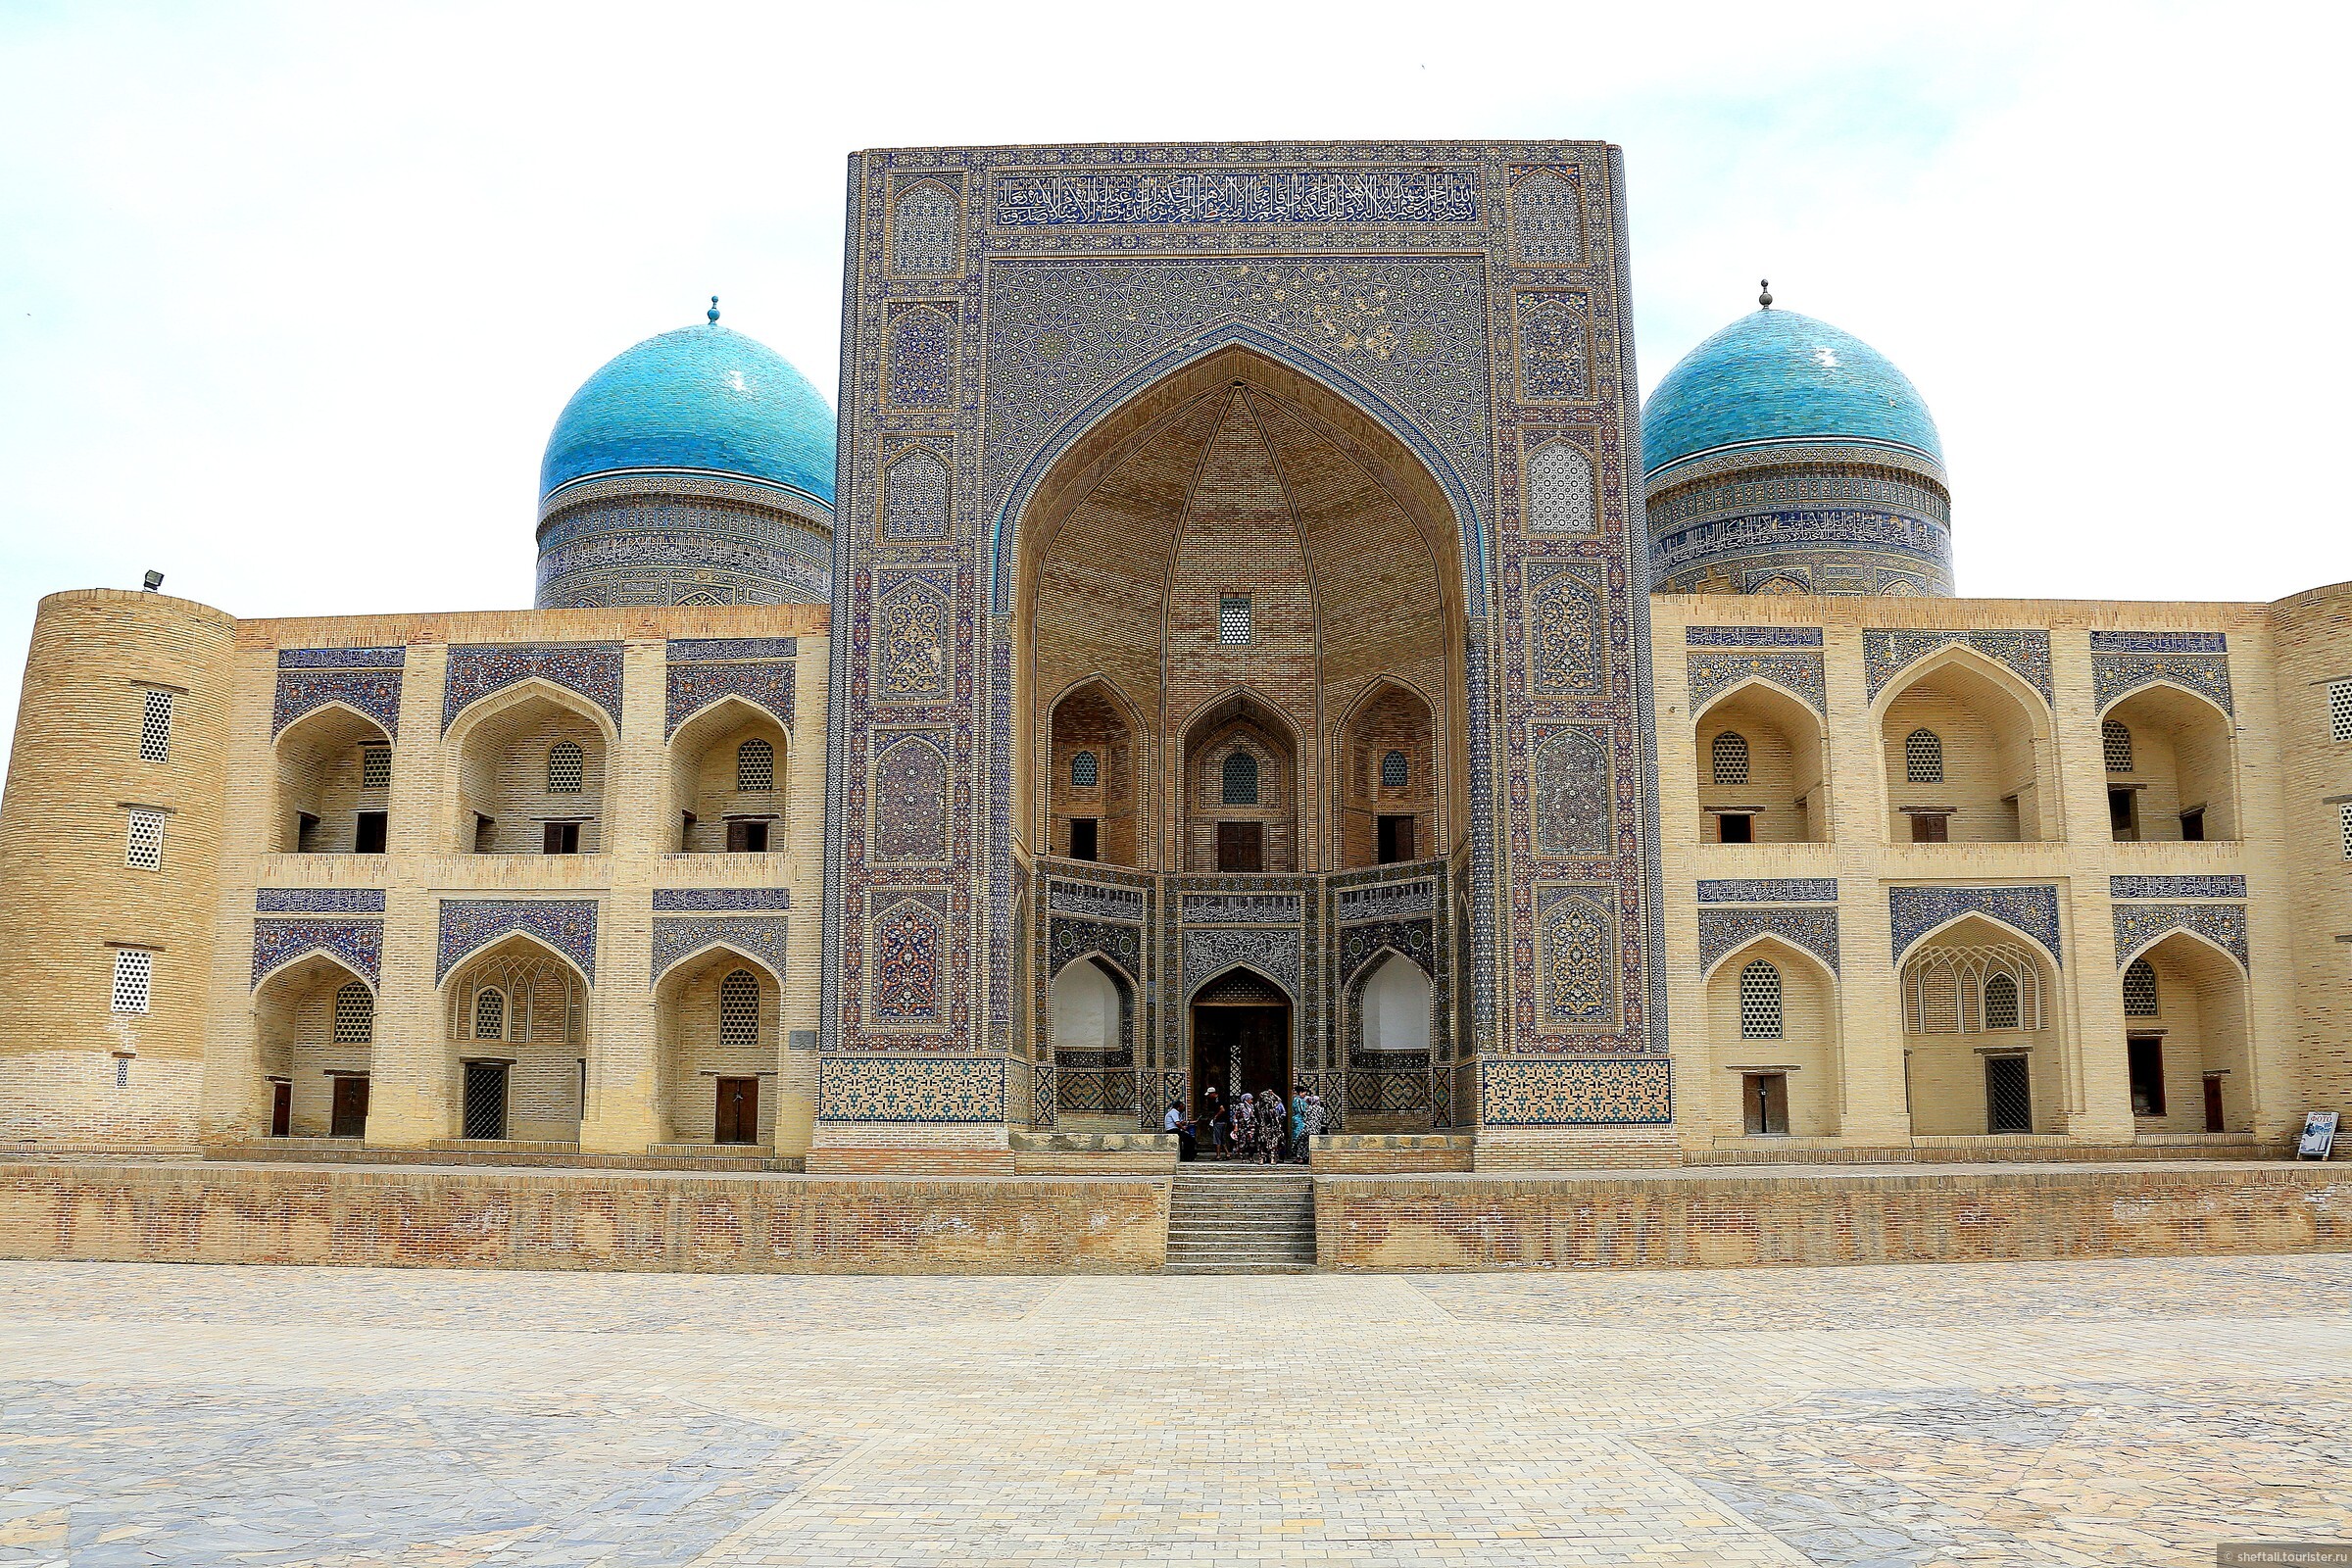 Узбекистан в данное время. Мечеть Калян Бухара. Медресе мири араб Бухара. Мавзолей Бахауддина Накшбанди Бухара. Медресе мир араб в Бухаре.